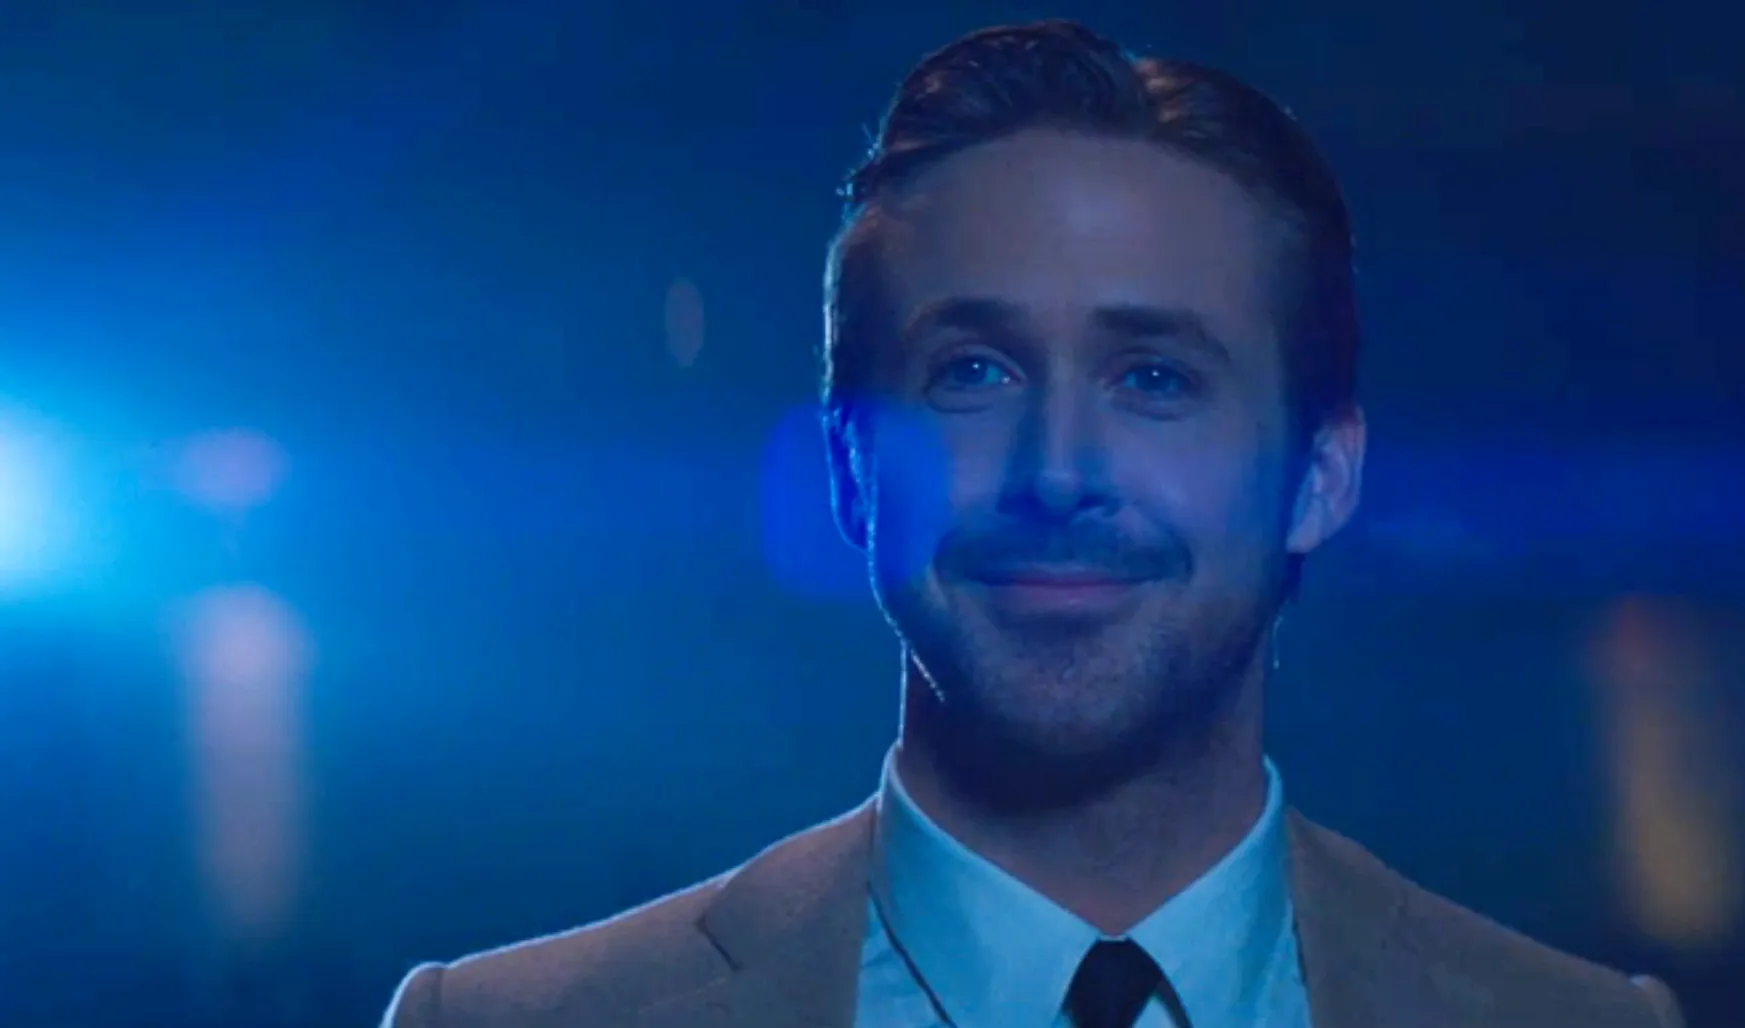 Ryan Gosling Singing To Emma Stone In This New “la La Land” Trailer Is